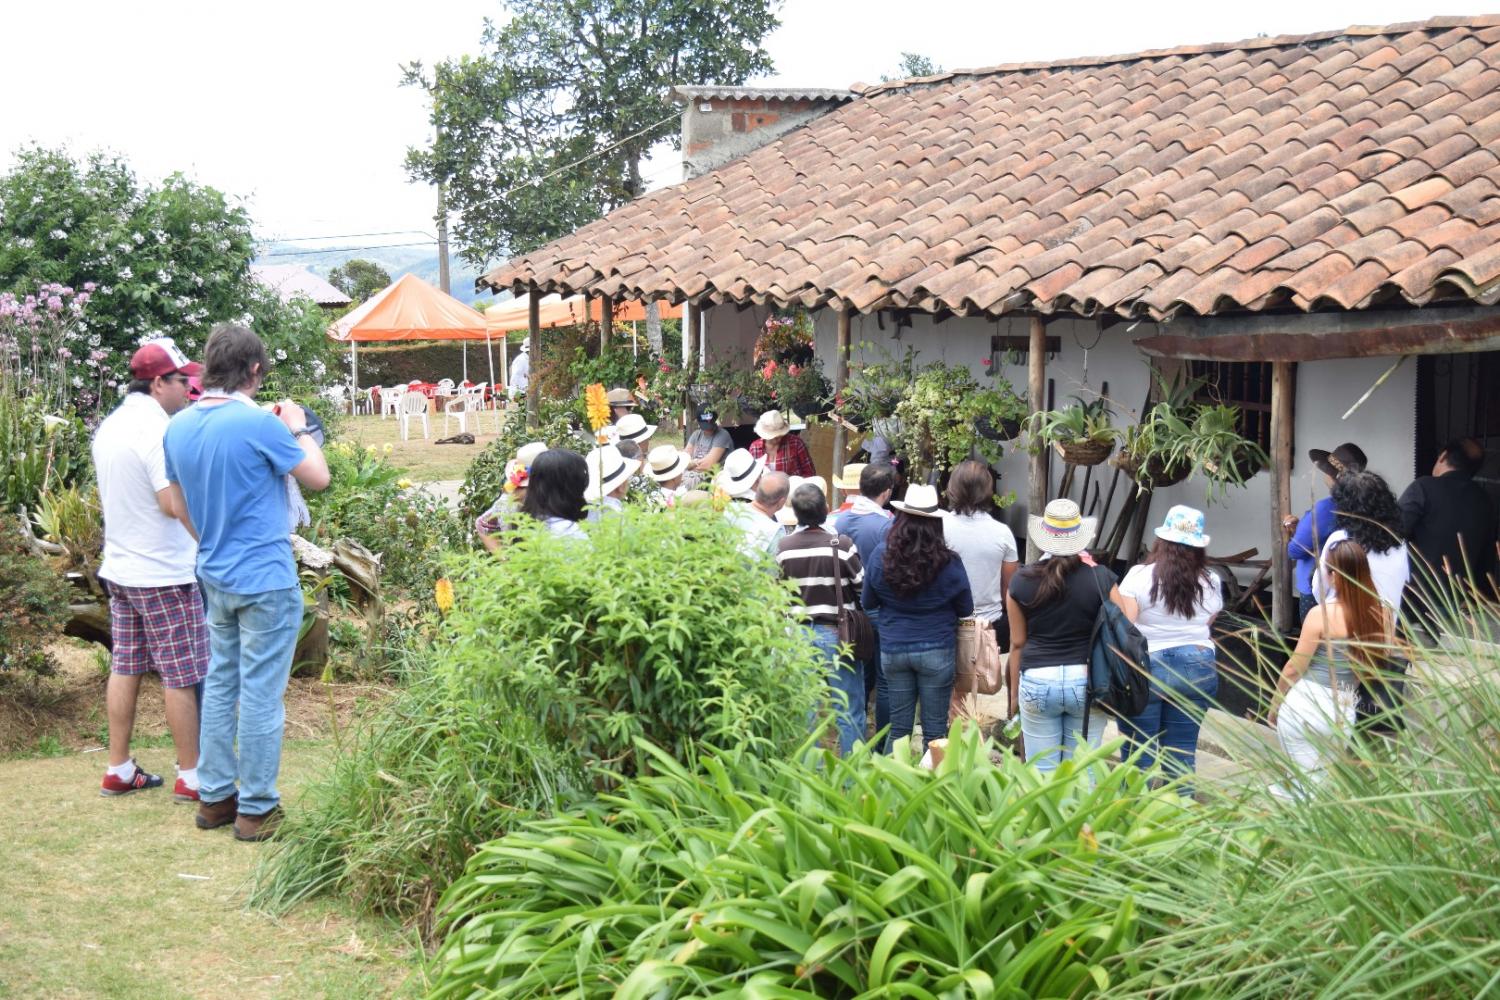 Silleteros Tour in Santa Elena - Arví Park - Medellín Antioquia Colombia